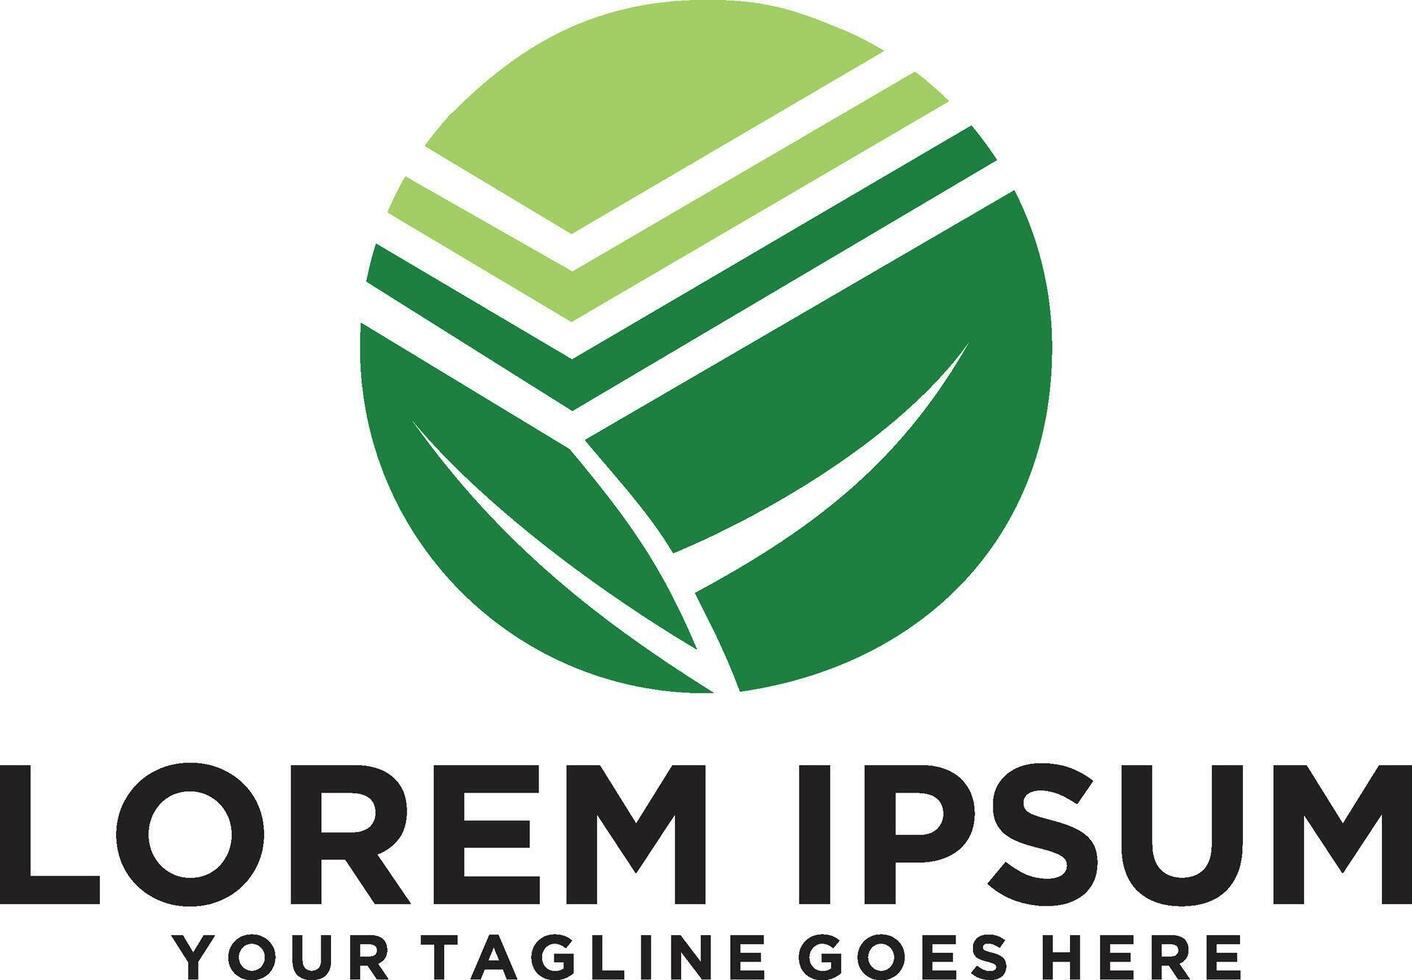 Green Investment Group logo idea vector